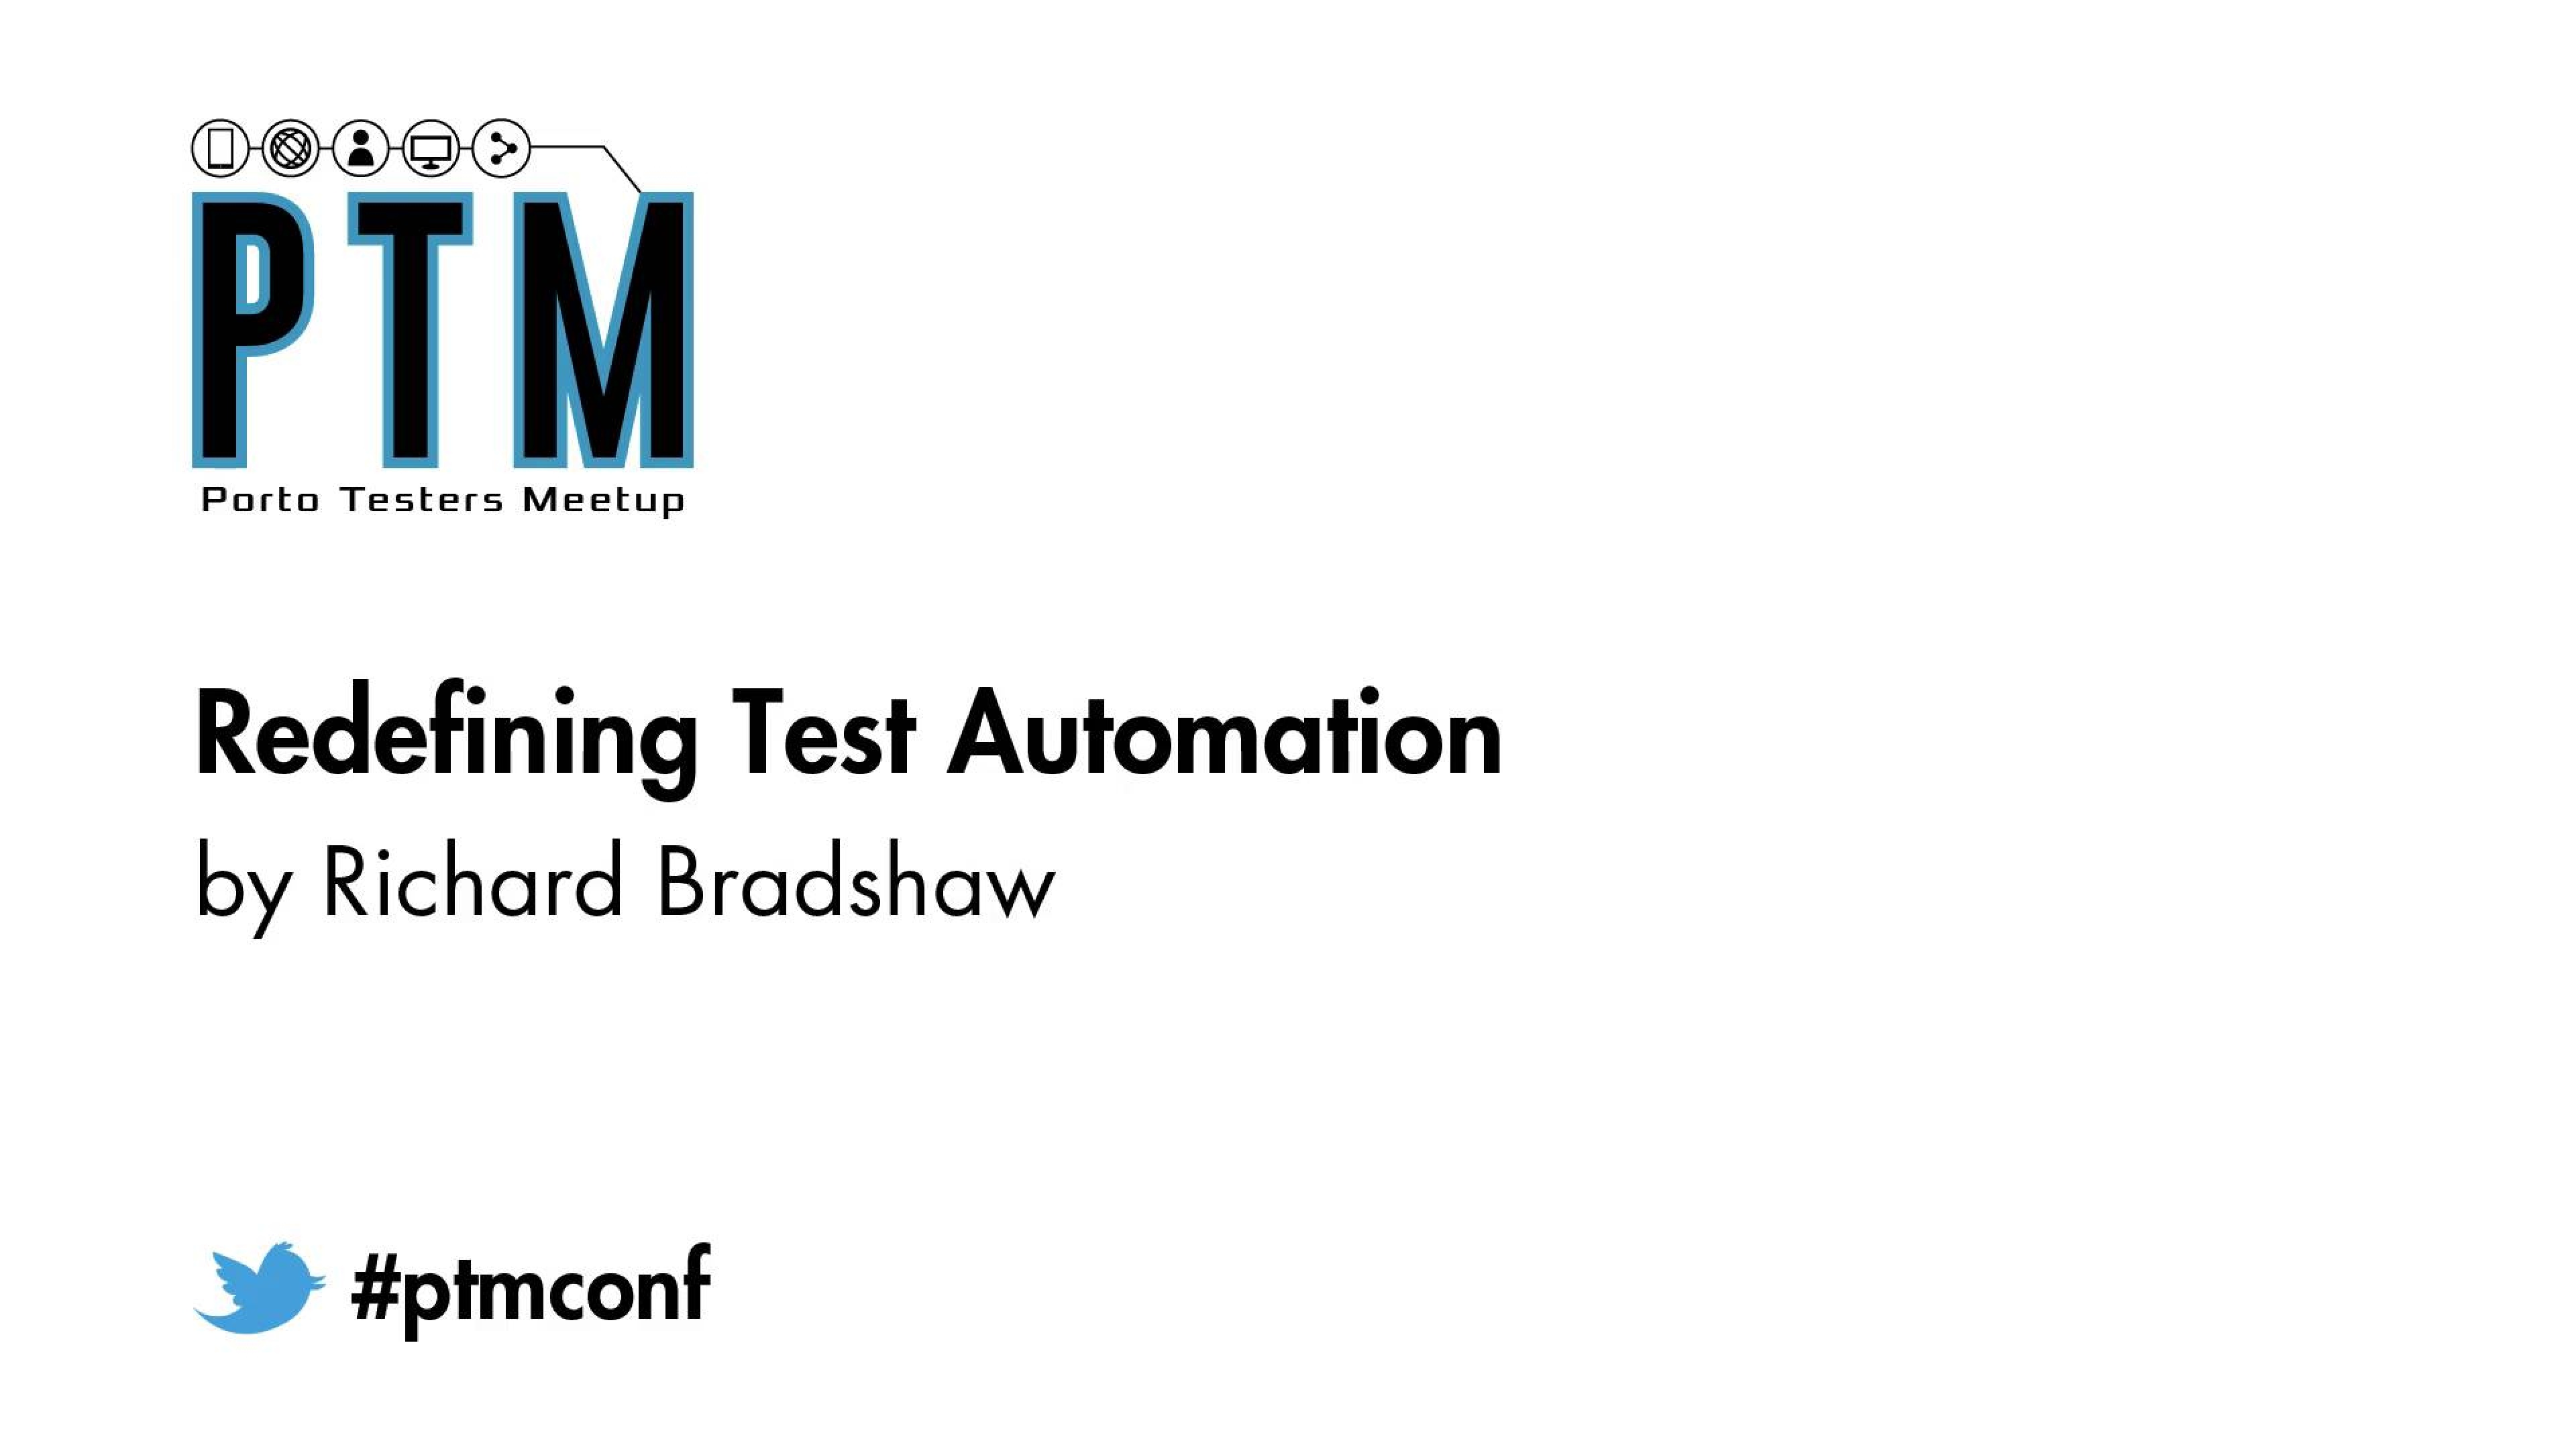 Redefining Test Automation - Richard Bradshaw